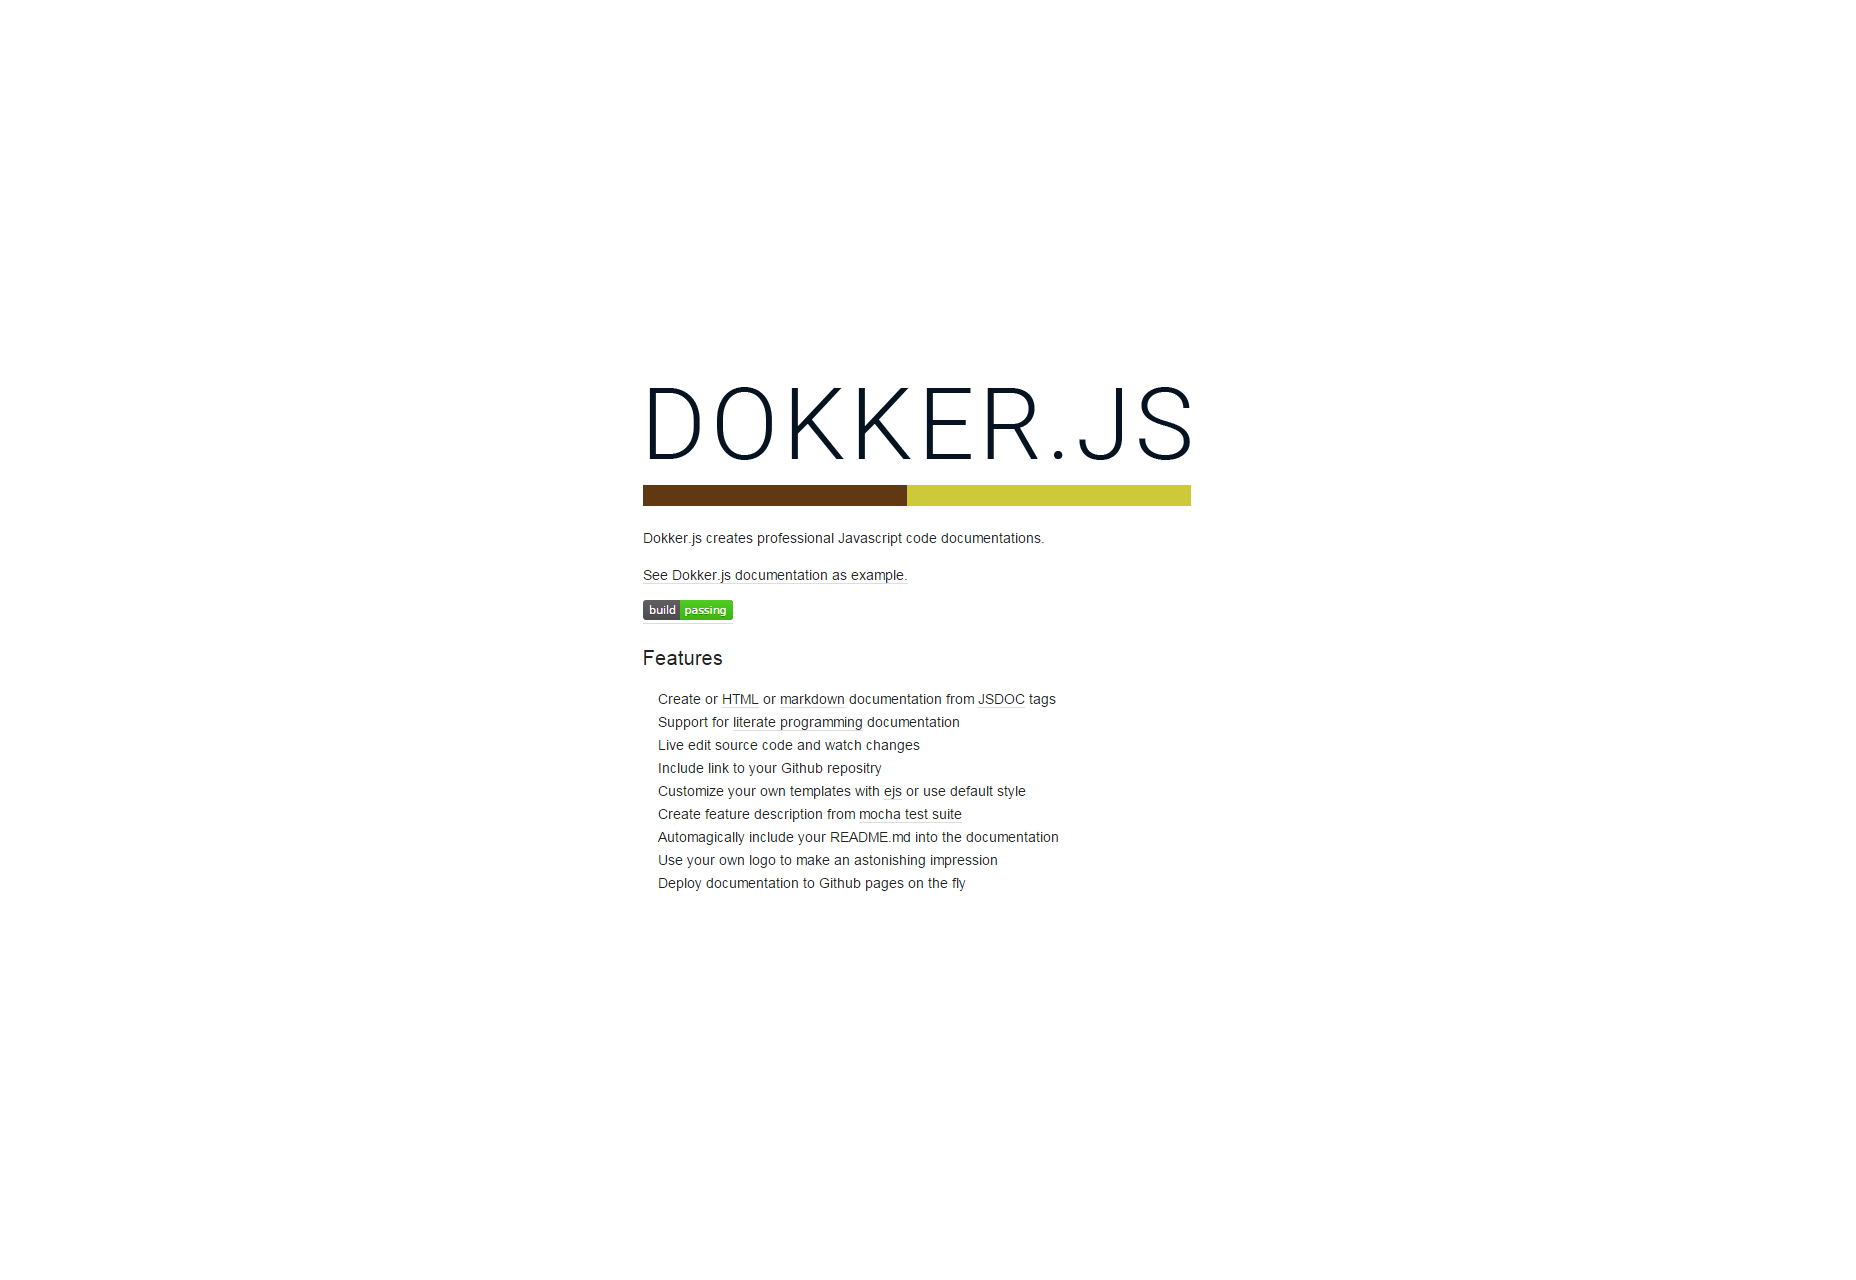 Dokker.js: Creatore di documentazione di codice Javascript professionale